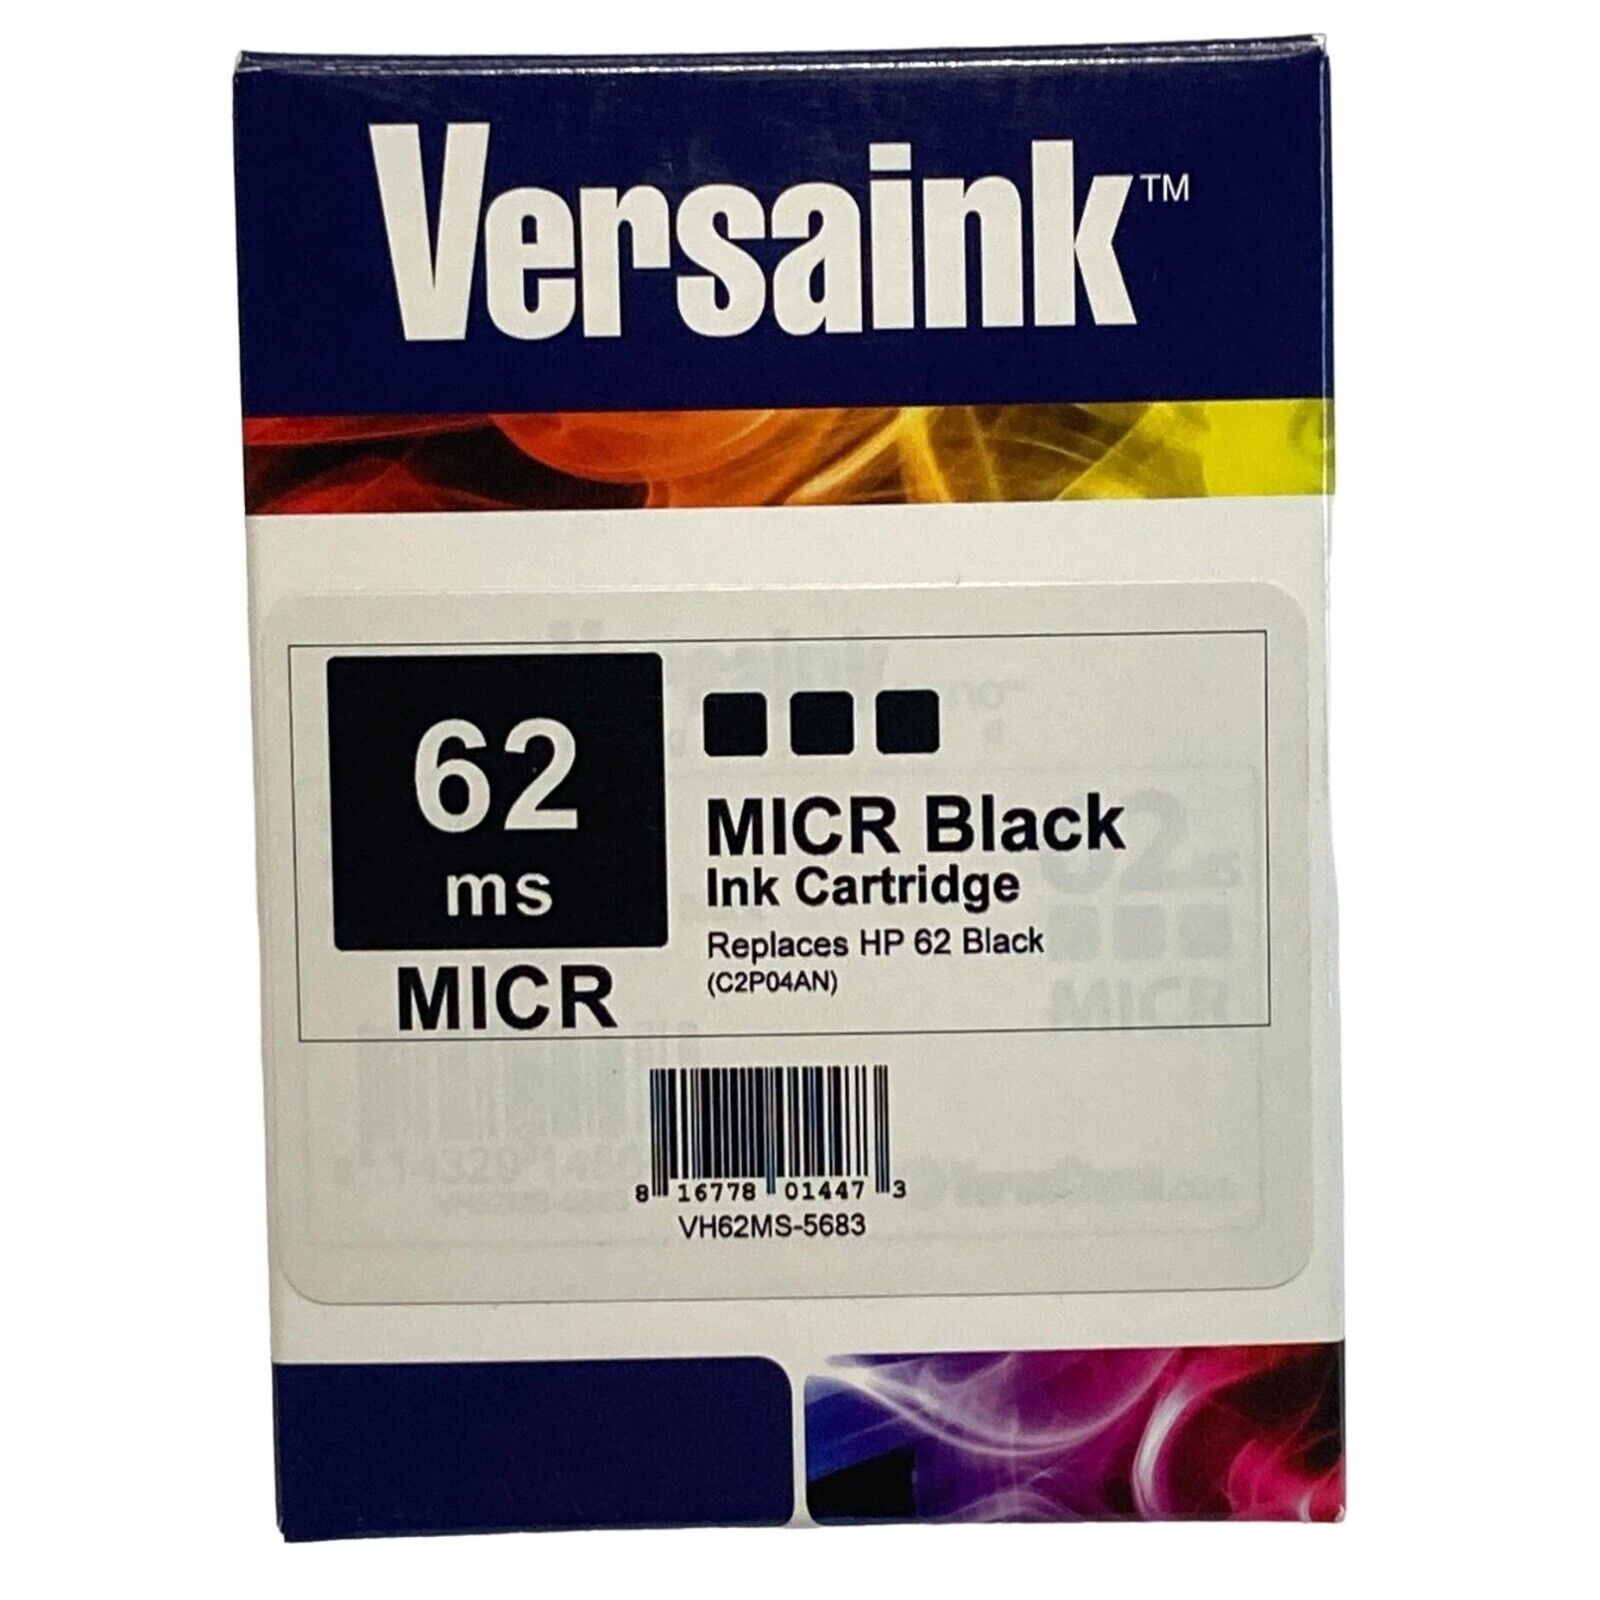 VersaInk nano HP 62 MS MICR Black Ink Cartridge for Check Printing NEW